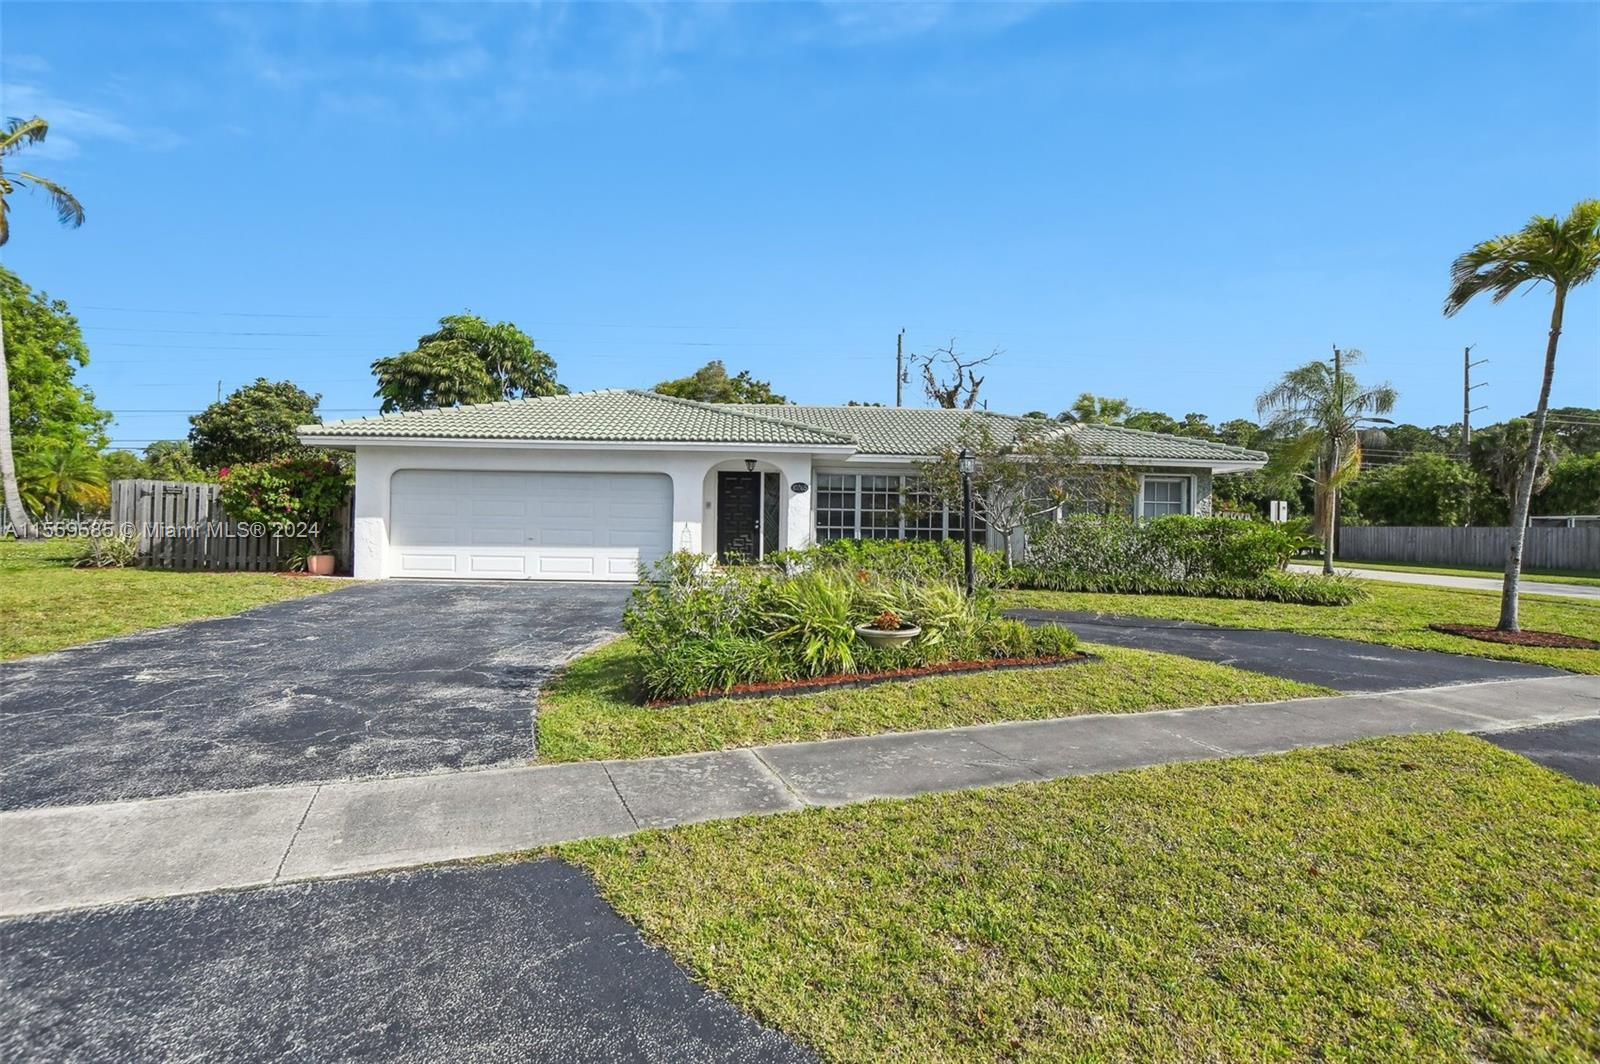 Property for Sale at 10265 Dorchester Dr, Boca Raton, Broward County, Florida - Bedrooms: 4 
Bathrooms: 3  - $685,000